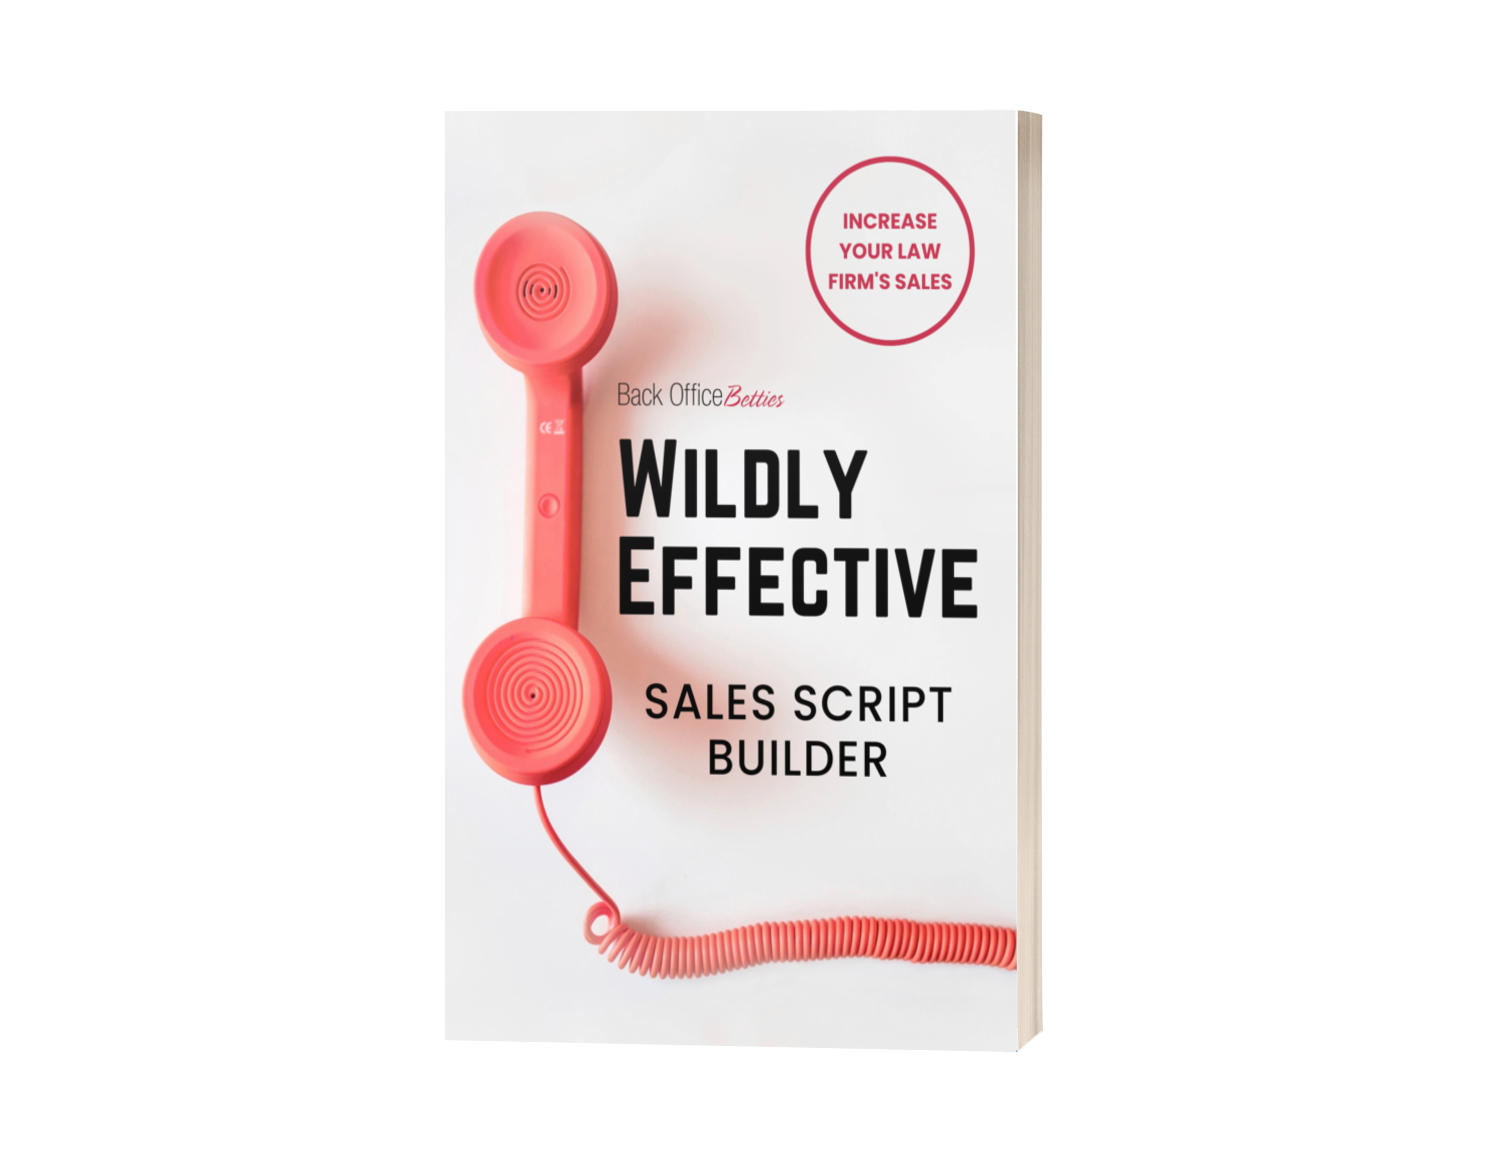 Wildly Effective sales script builder.